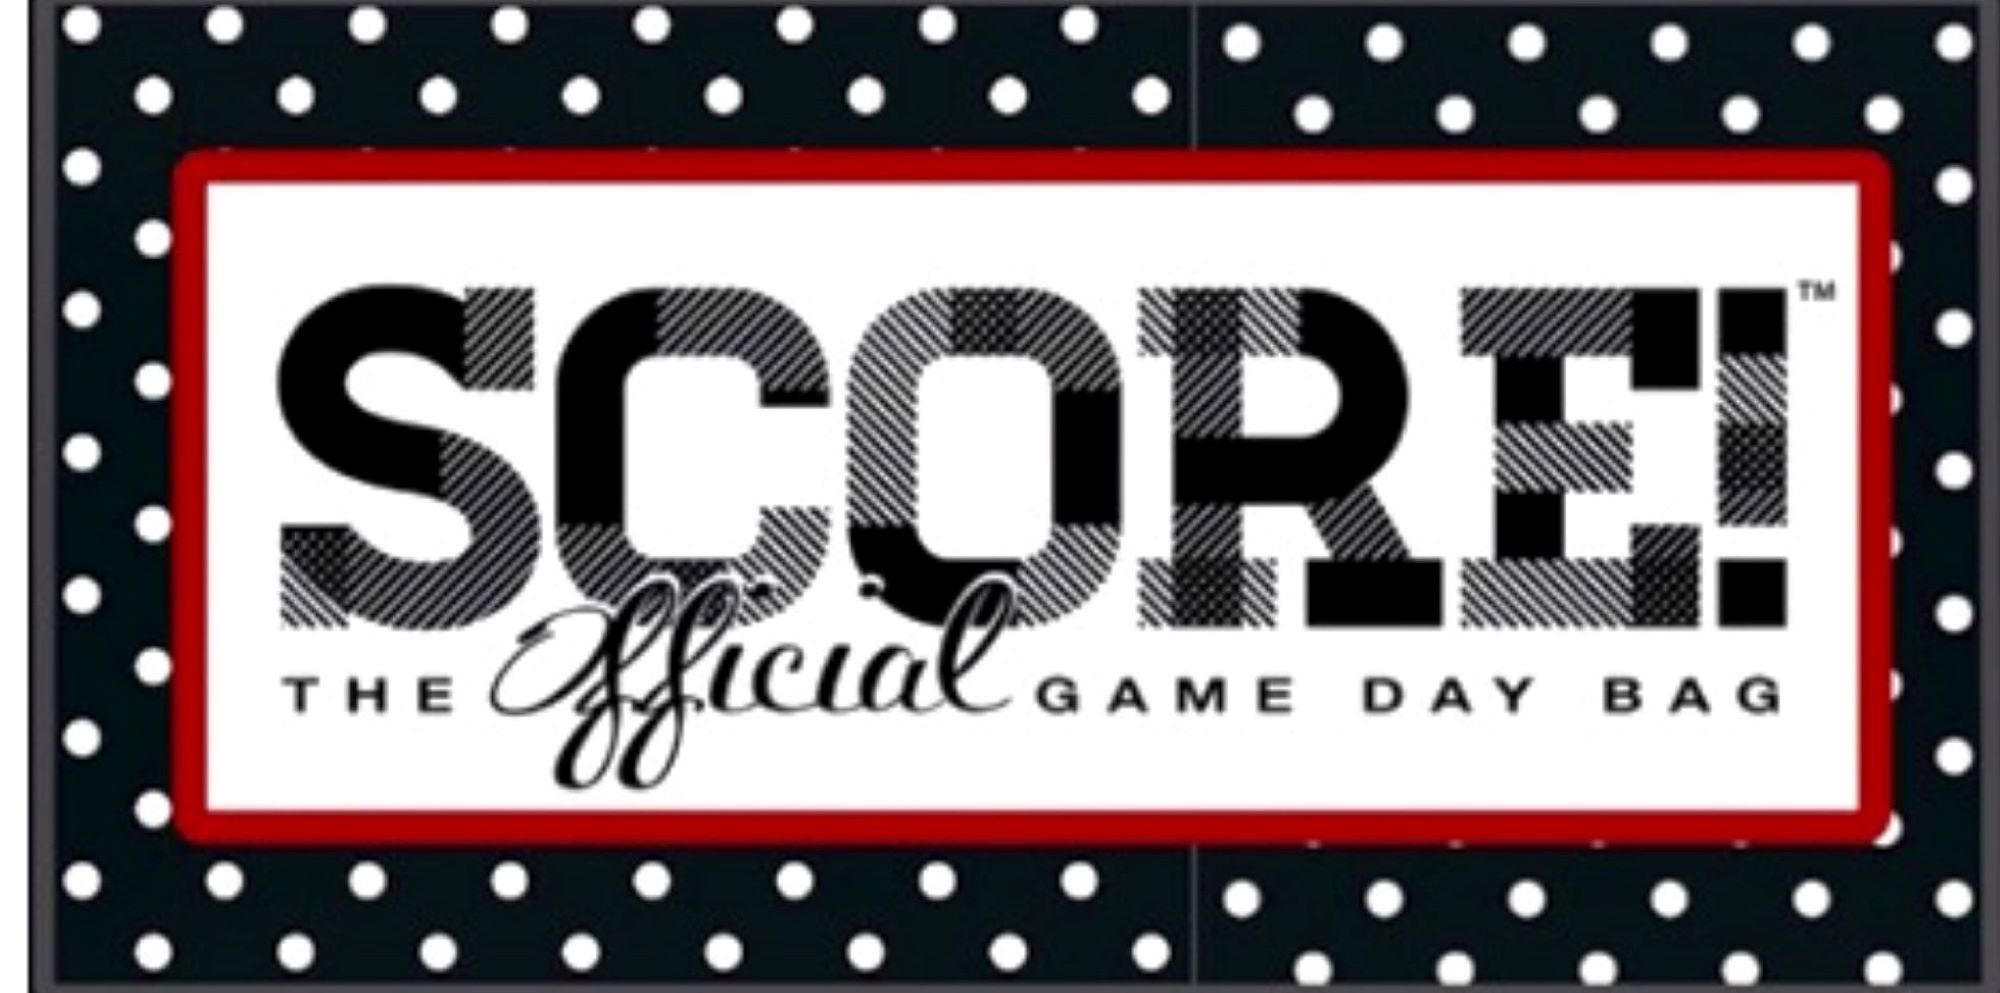 (c) Scoregamedaybag.com